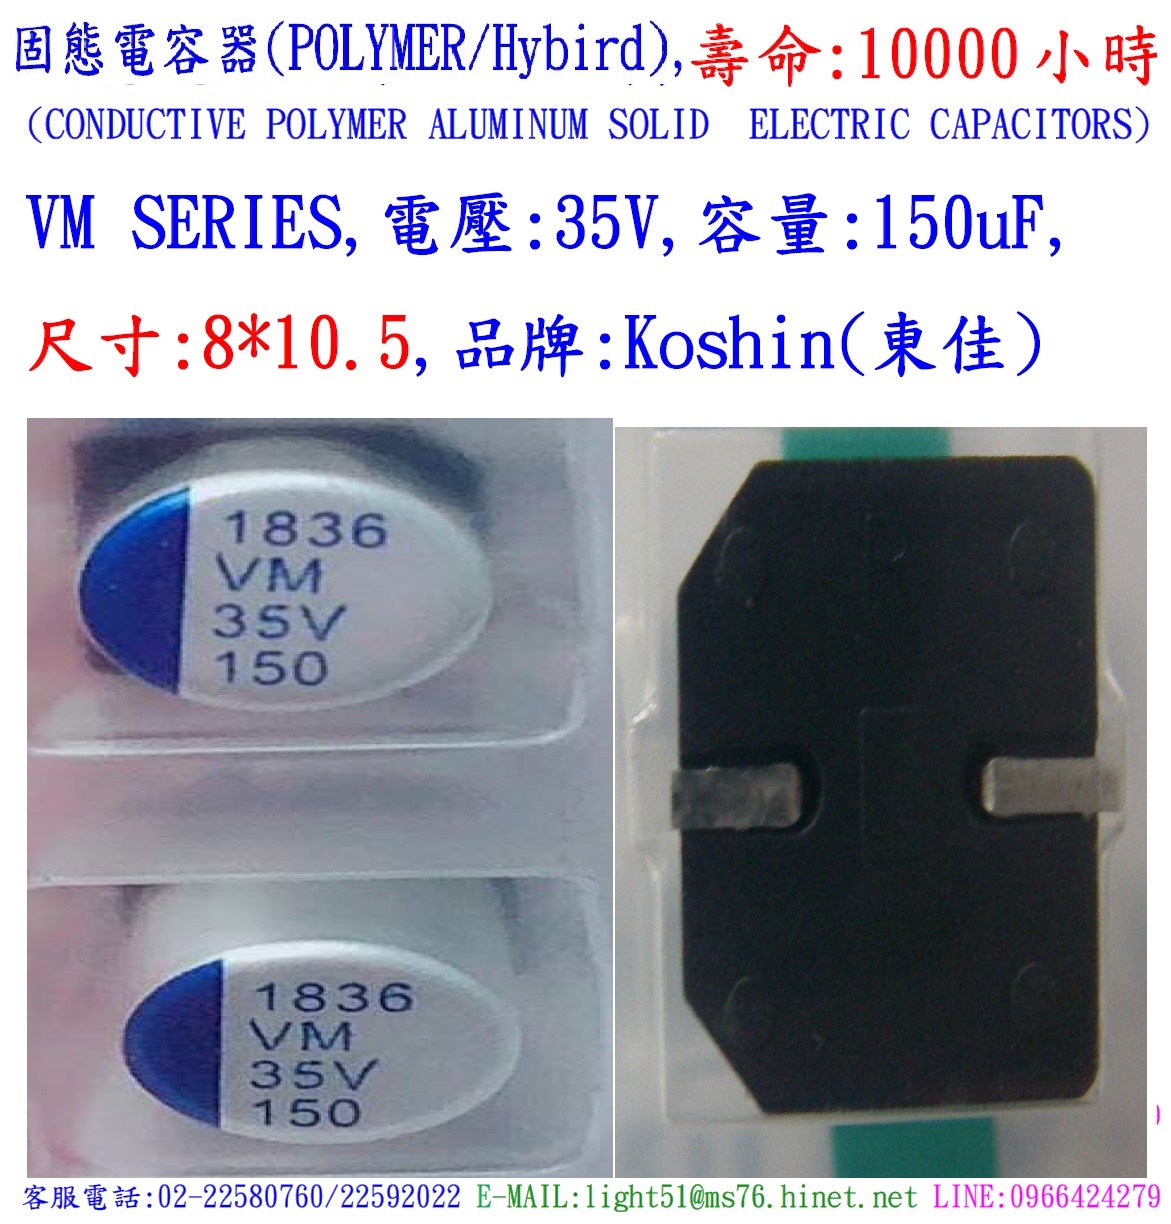 VM,35V,150uF,尺寸:8X10.5,固態電容器(POLYMER/Hybird),壽命10000小時,KOSHIN(東佳)